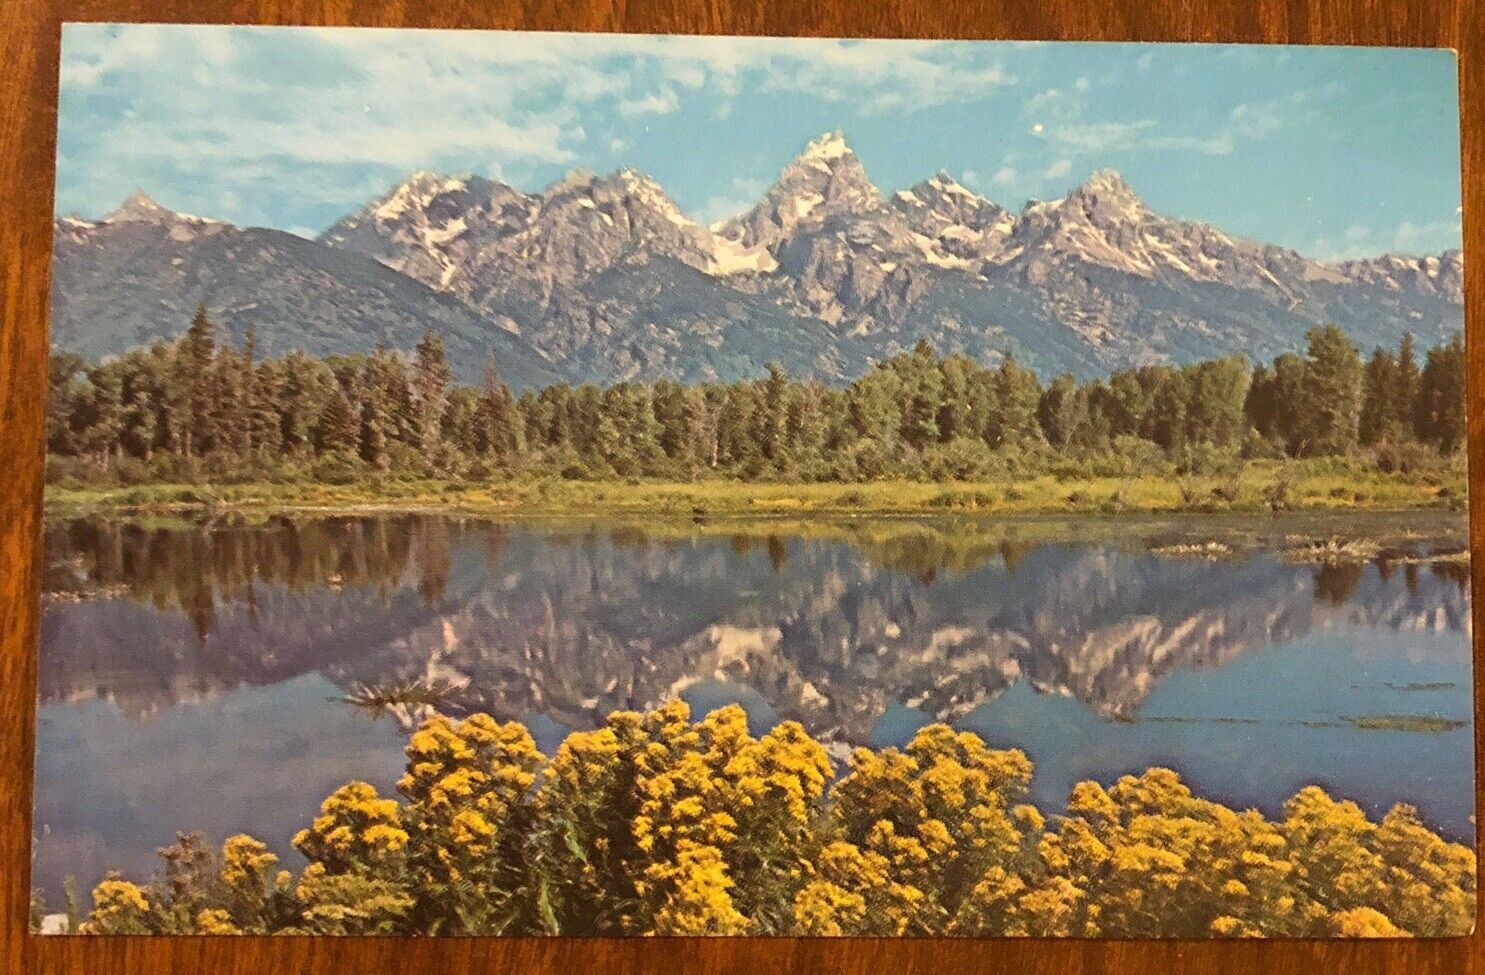 Postcard Goldenrod in bloom, Blacktail ponds Grand Teton National Park, Wyoming